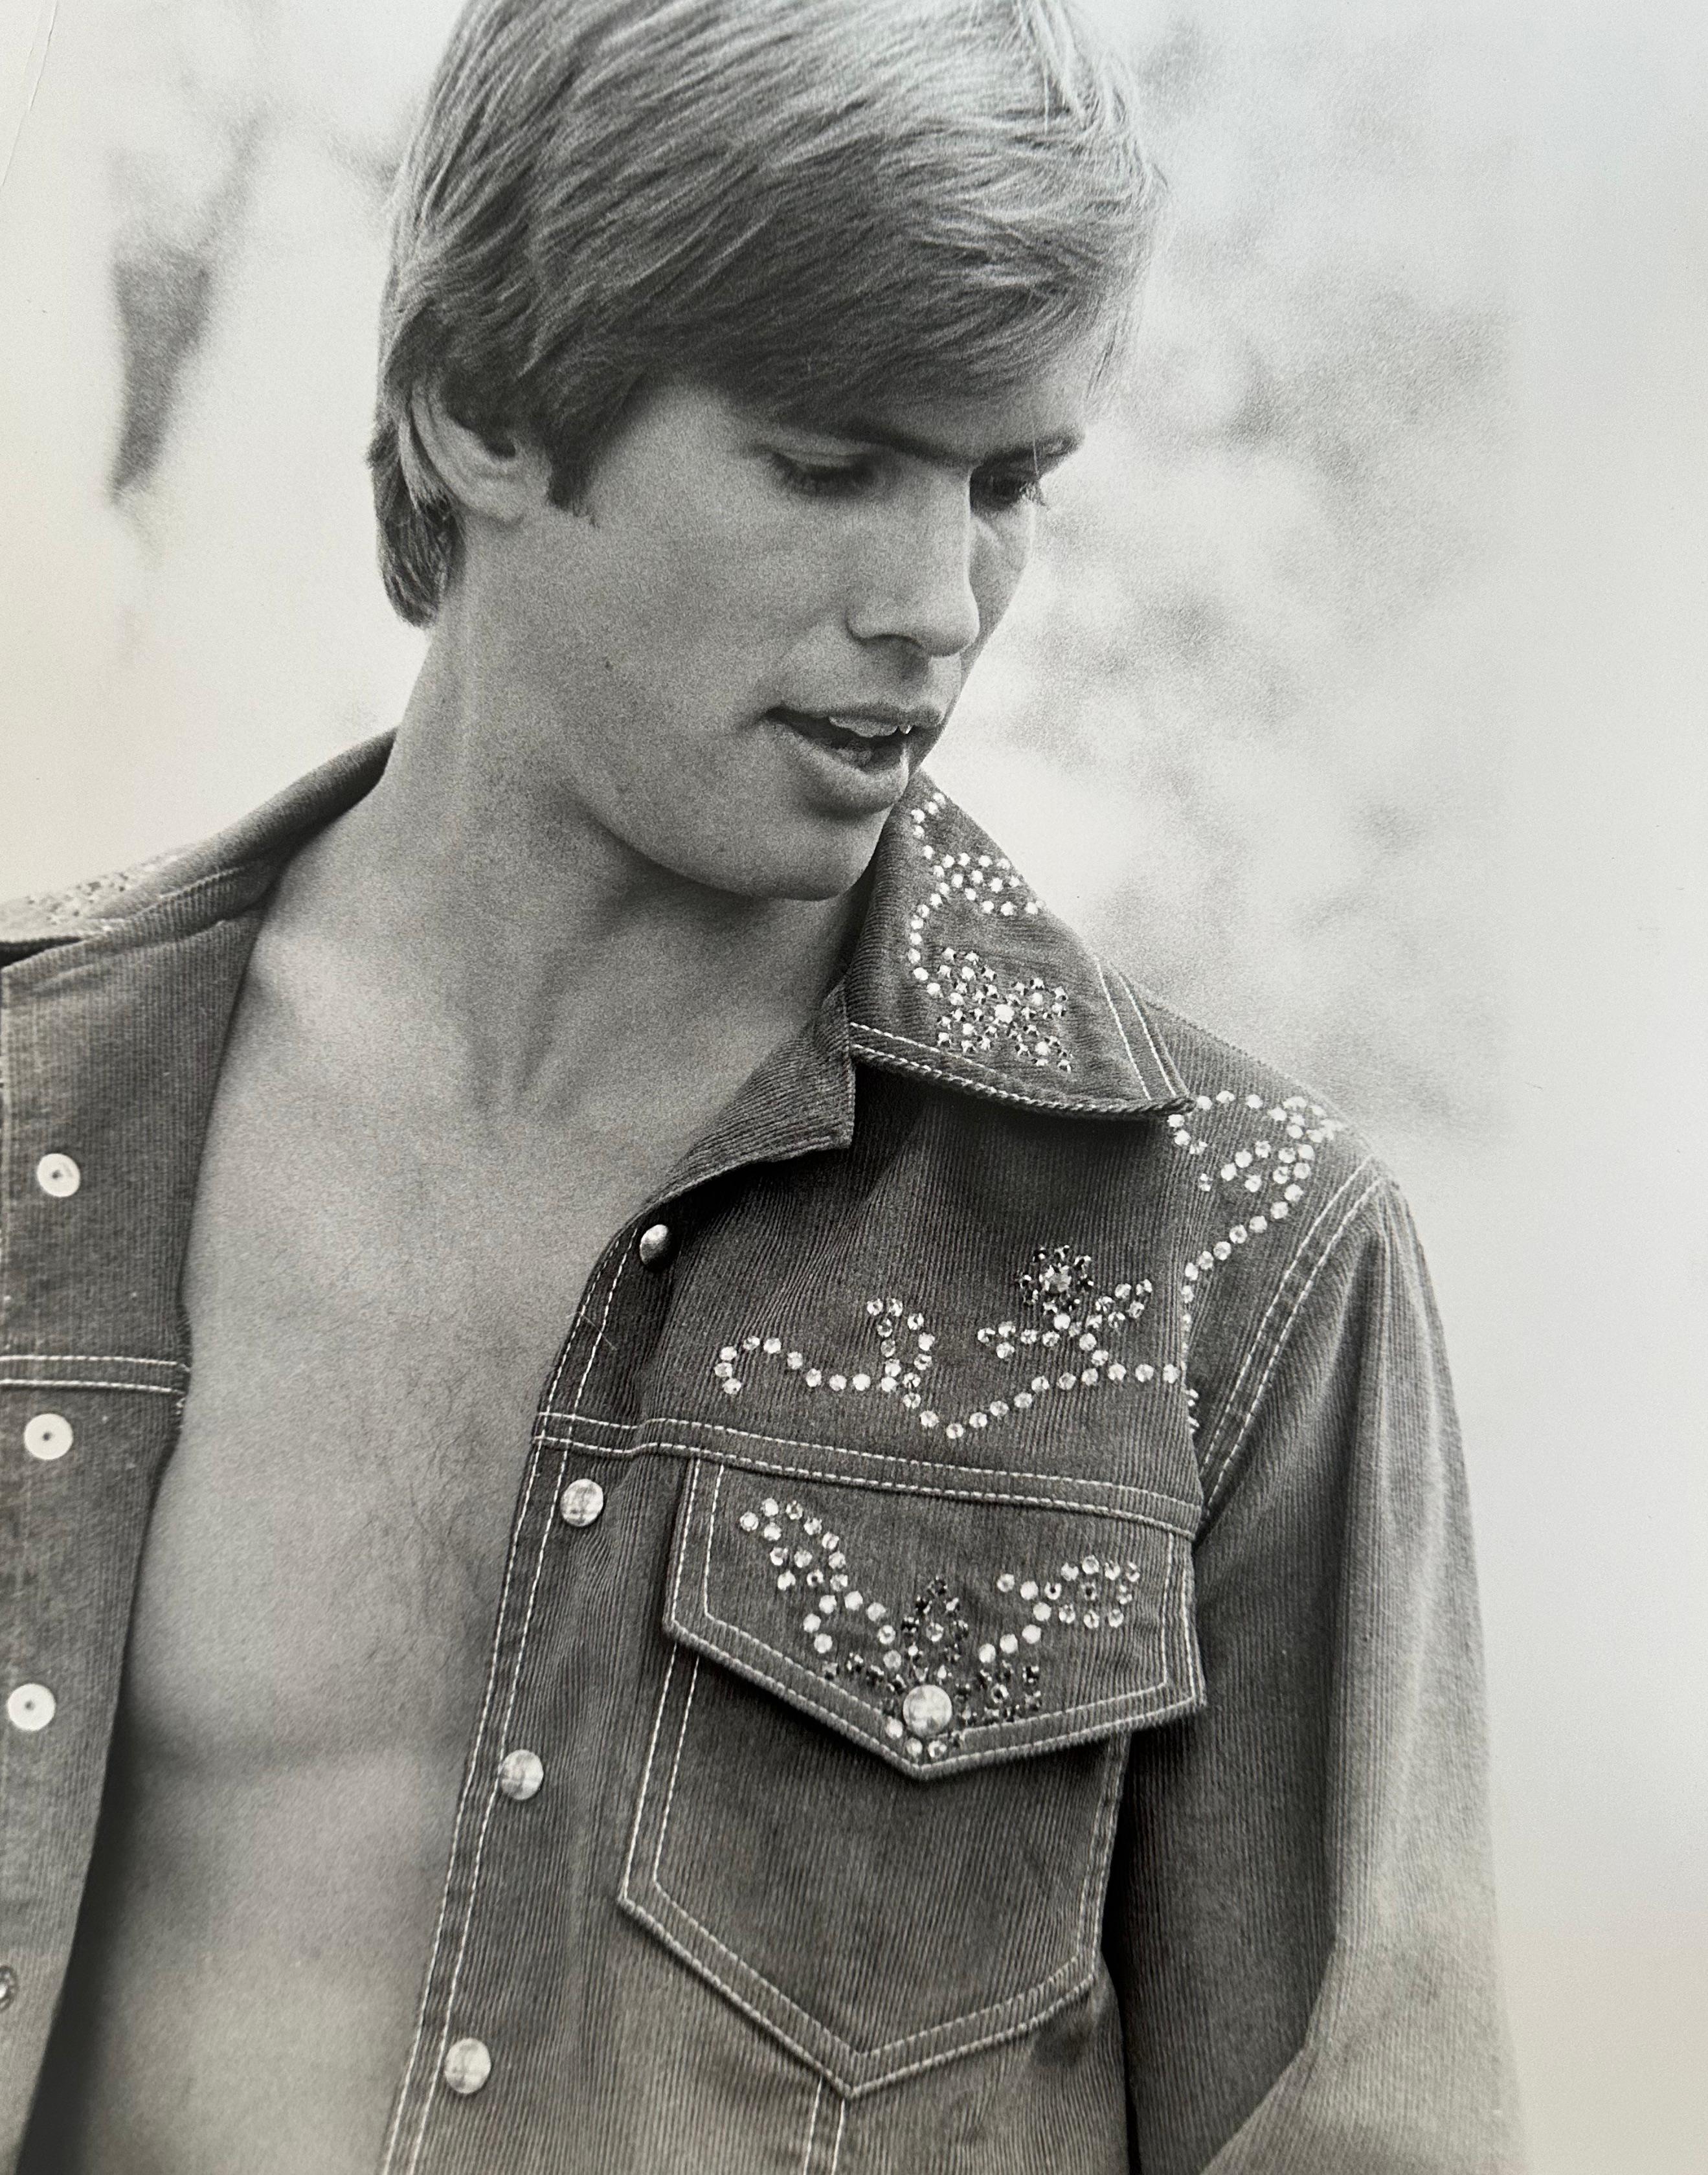 Kenn Duncan Figurative Photograph - 1970s Fashion editorial photo Male Model